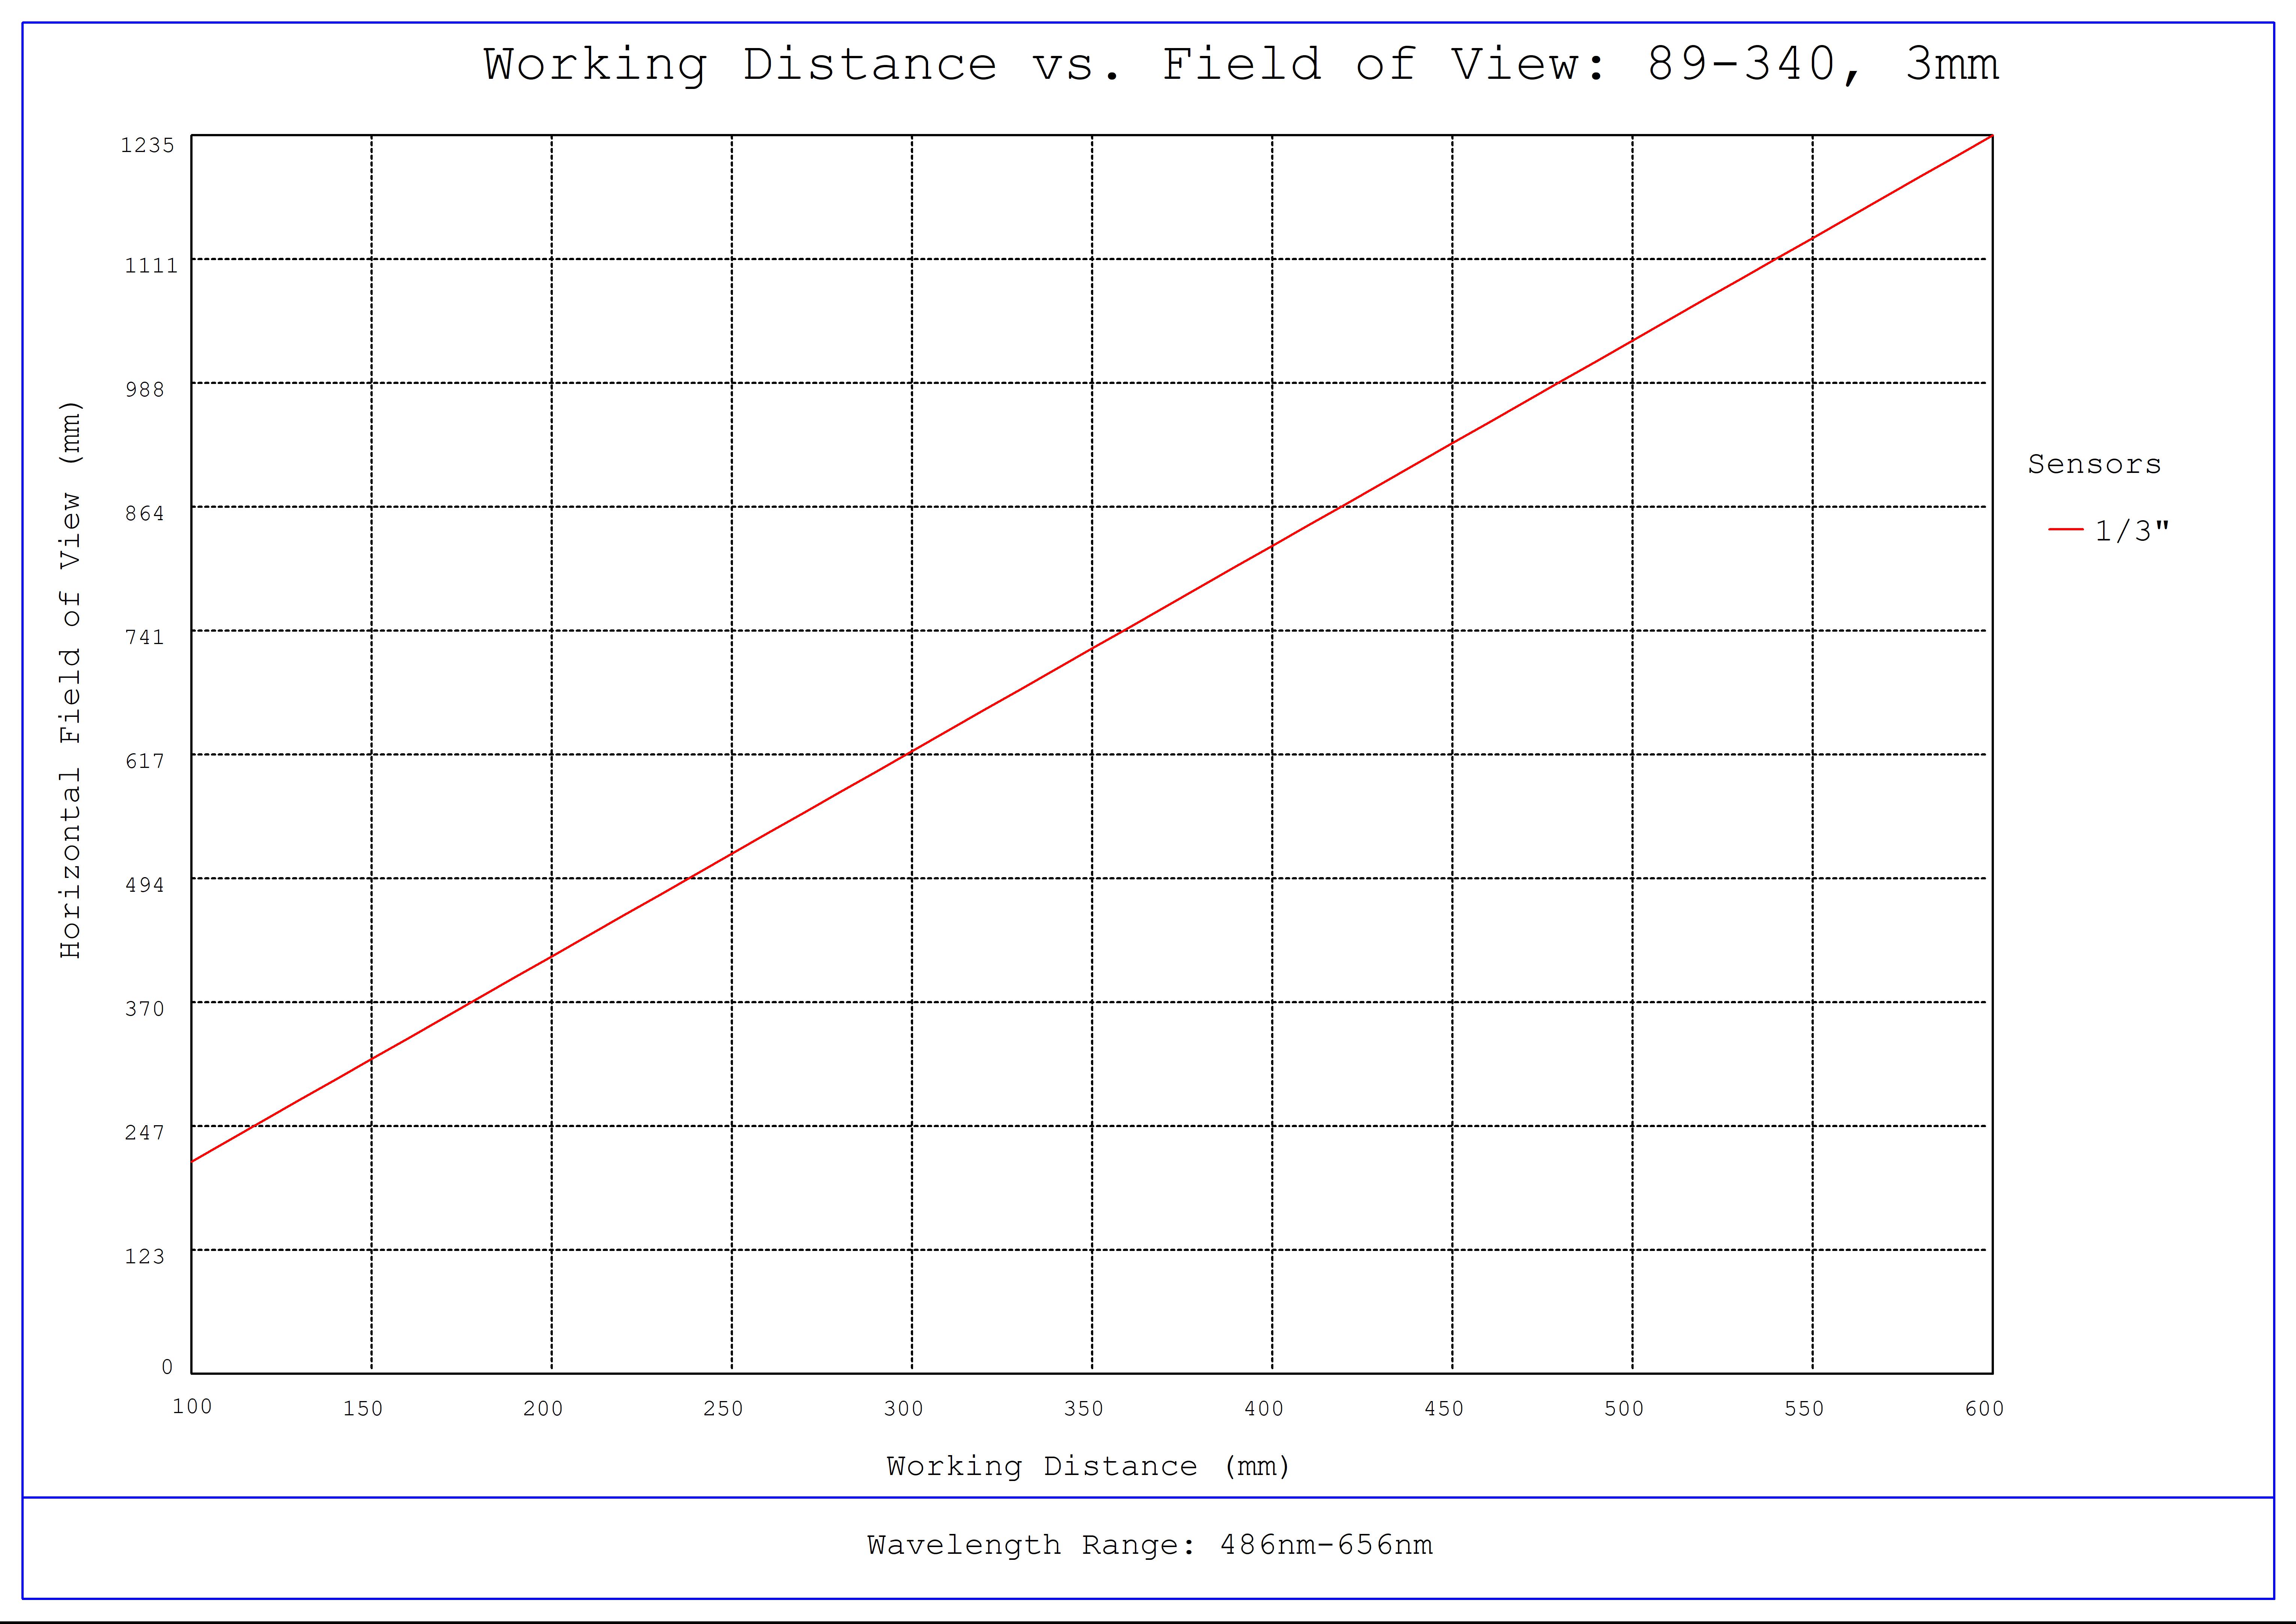 #20-055, 3mm FL f/2.5, IR-Cut Blue Series M12 Lens, Working Distance versus Field of View Plot